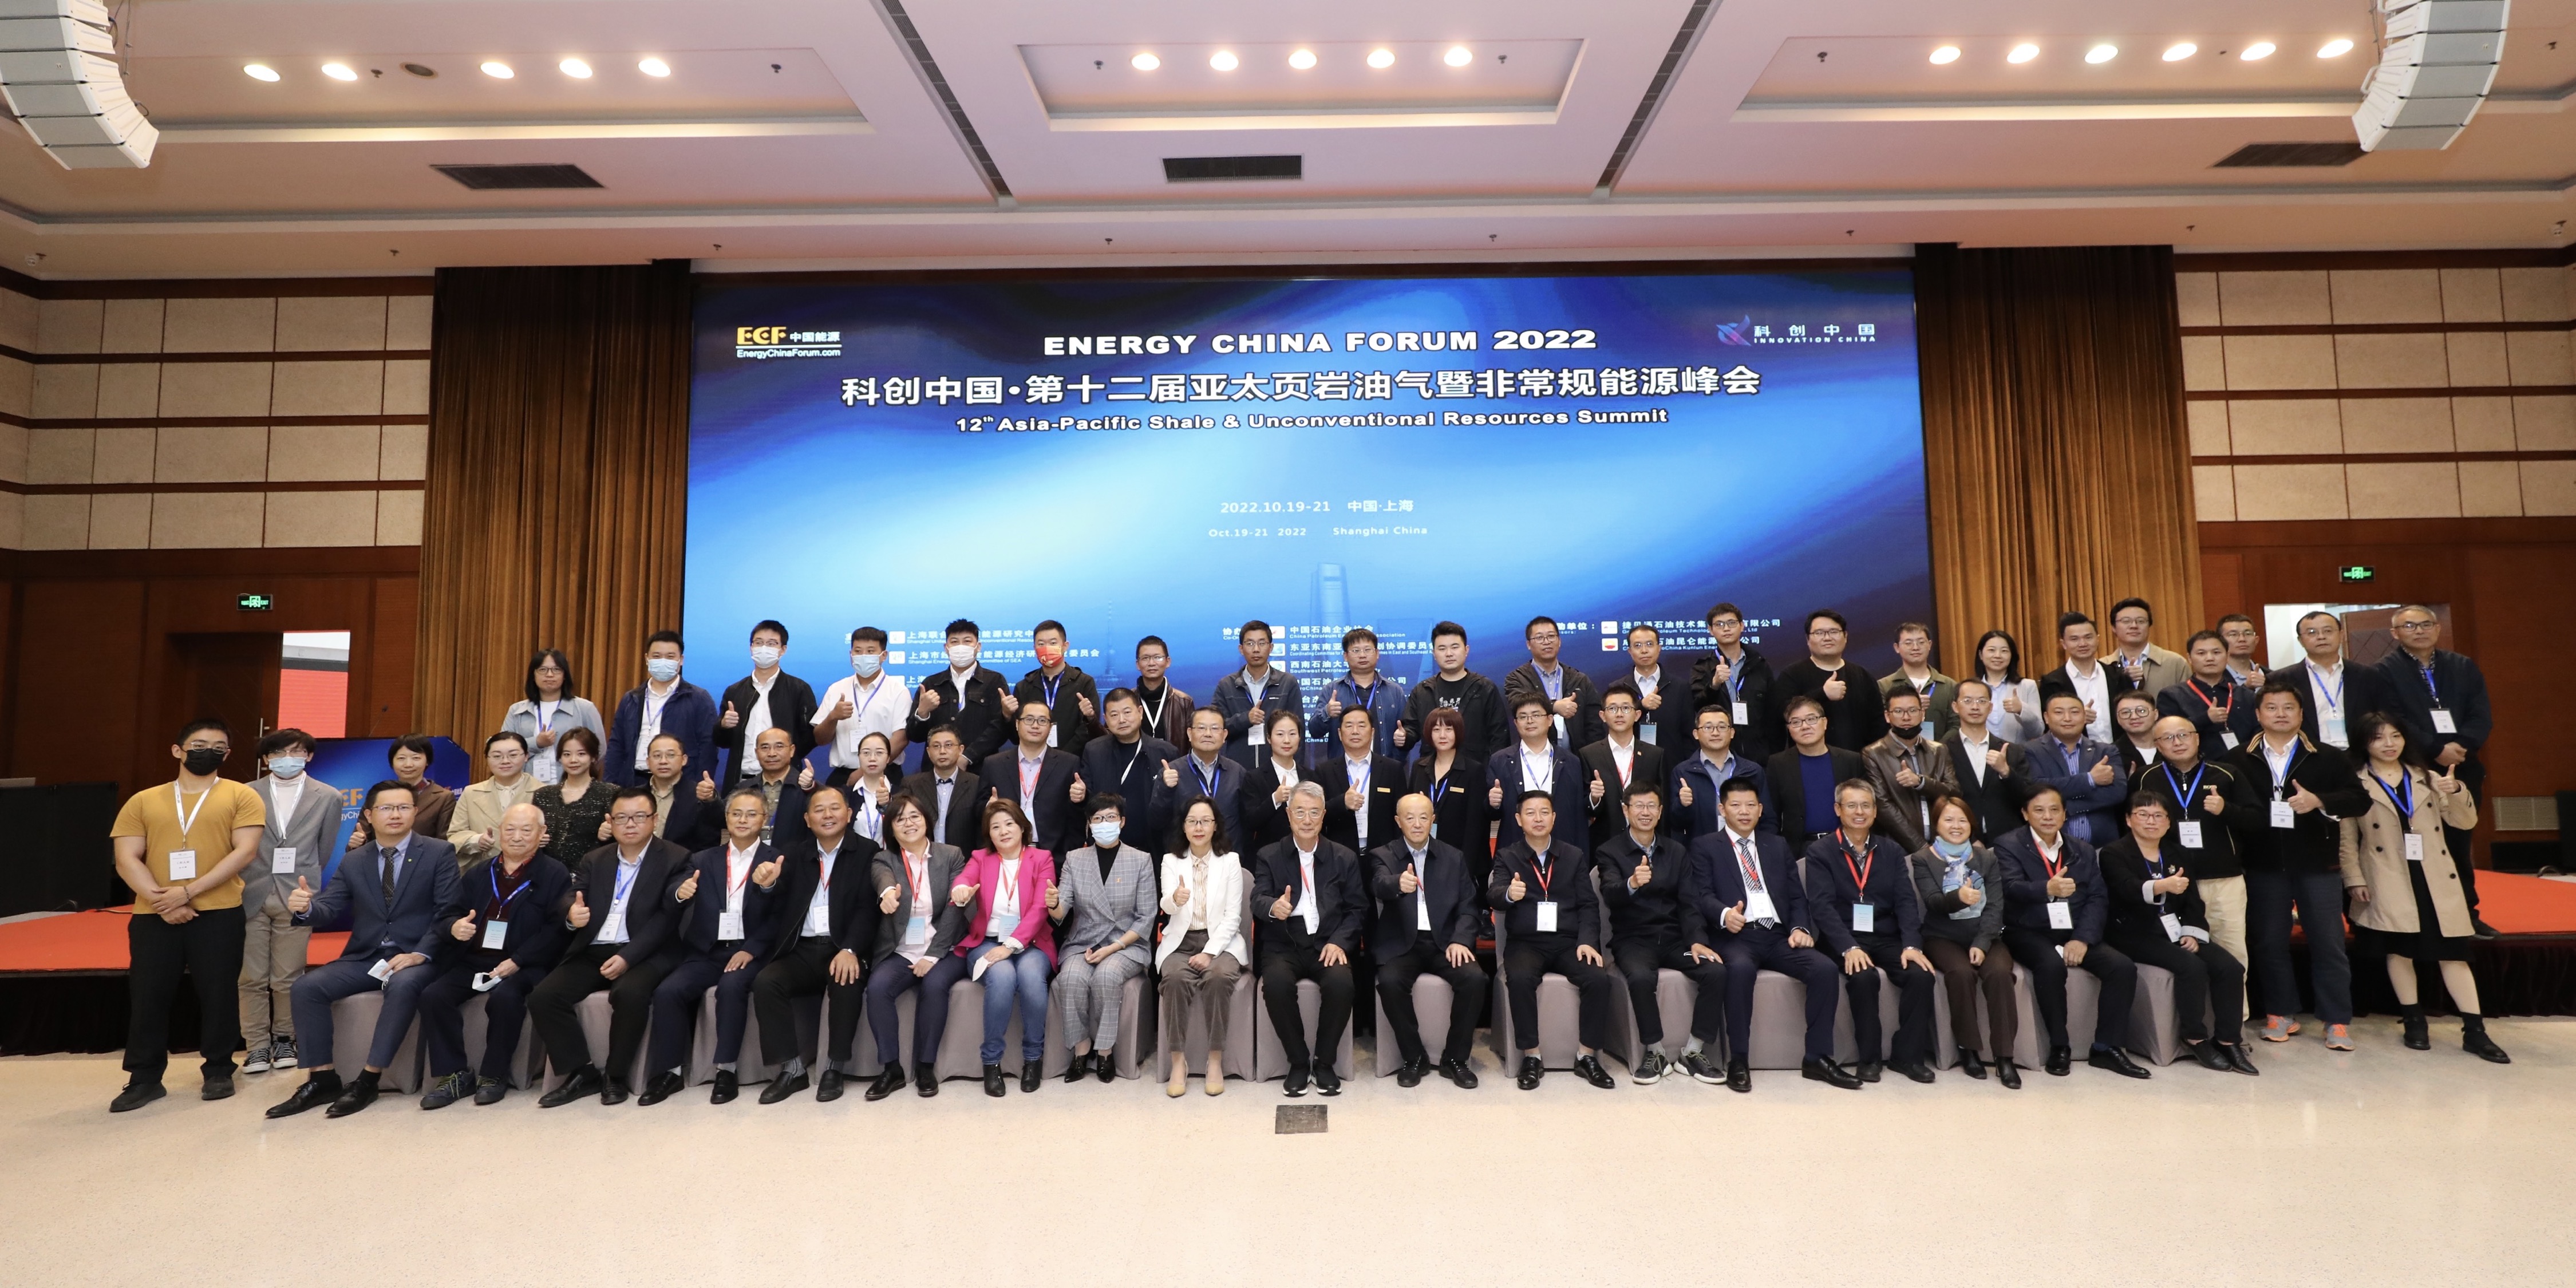 Energy China Forum 2022, Shanghai, China